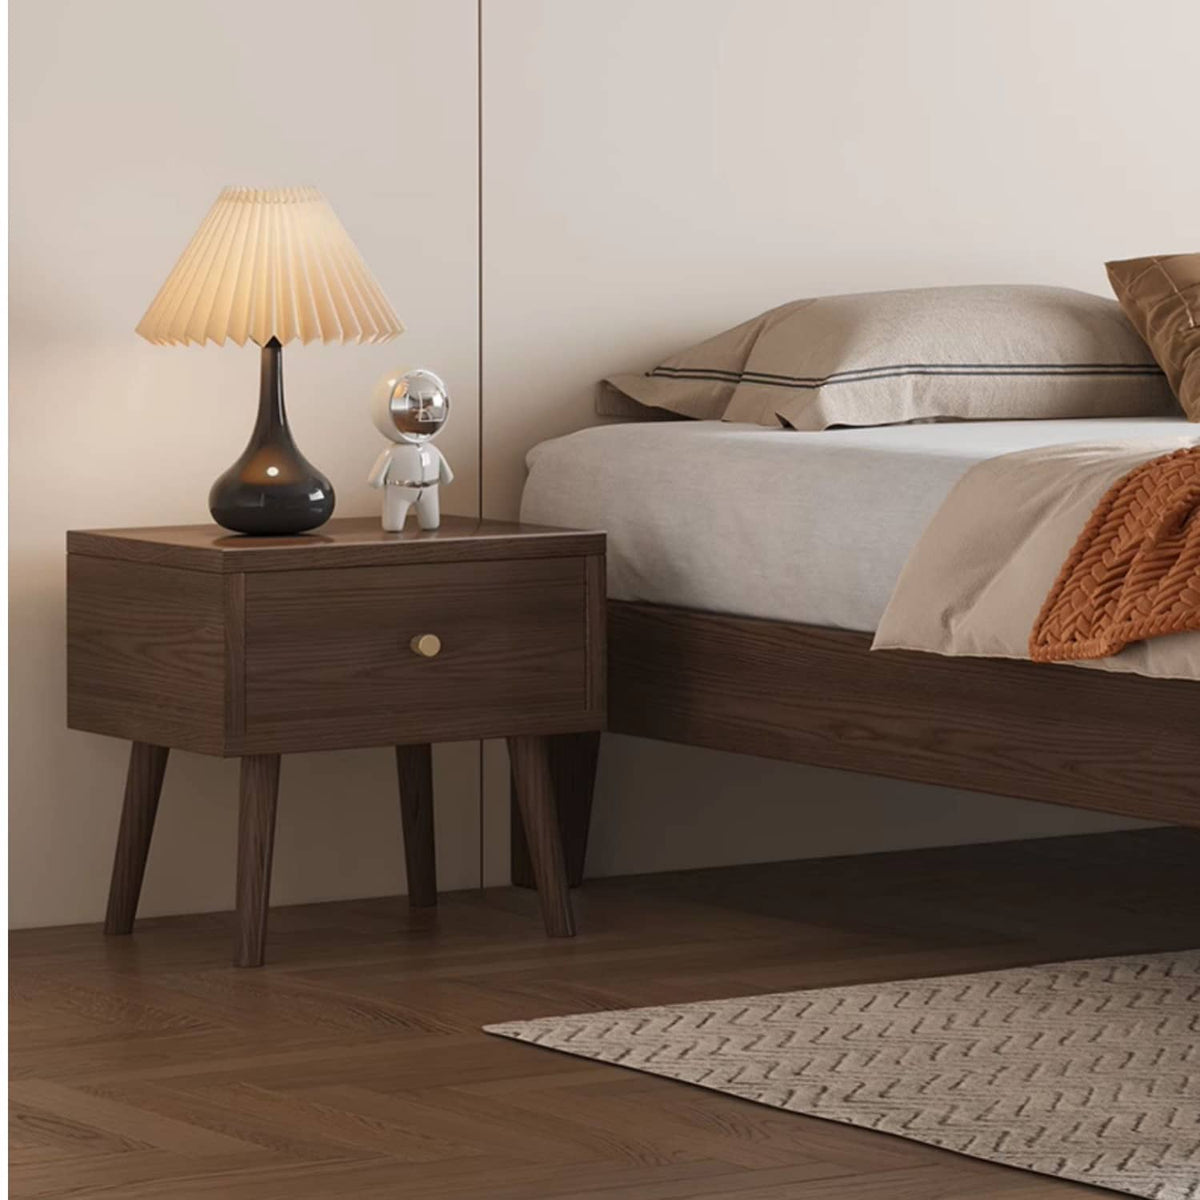 Elegant Brown Rubber Wood Pine Bed - Durable & Stylish Bedroom Furniture hmak-245